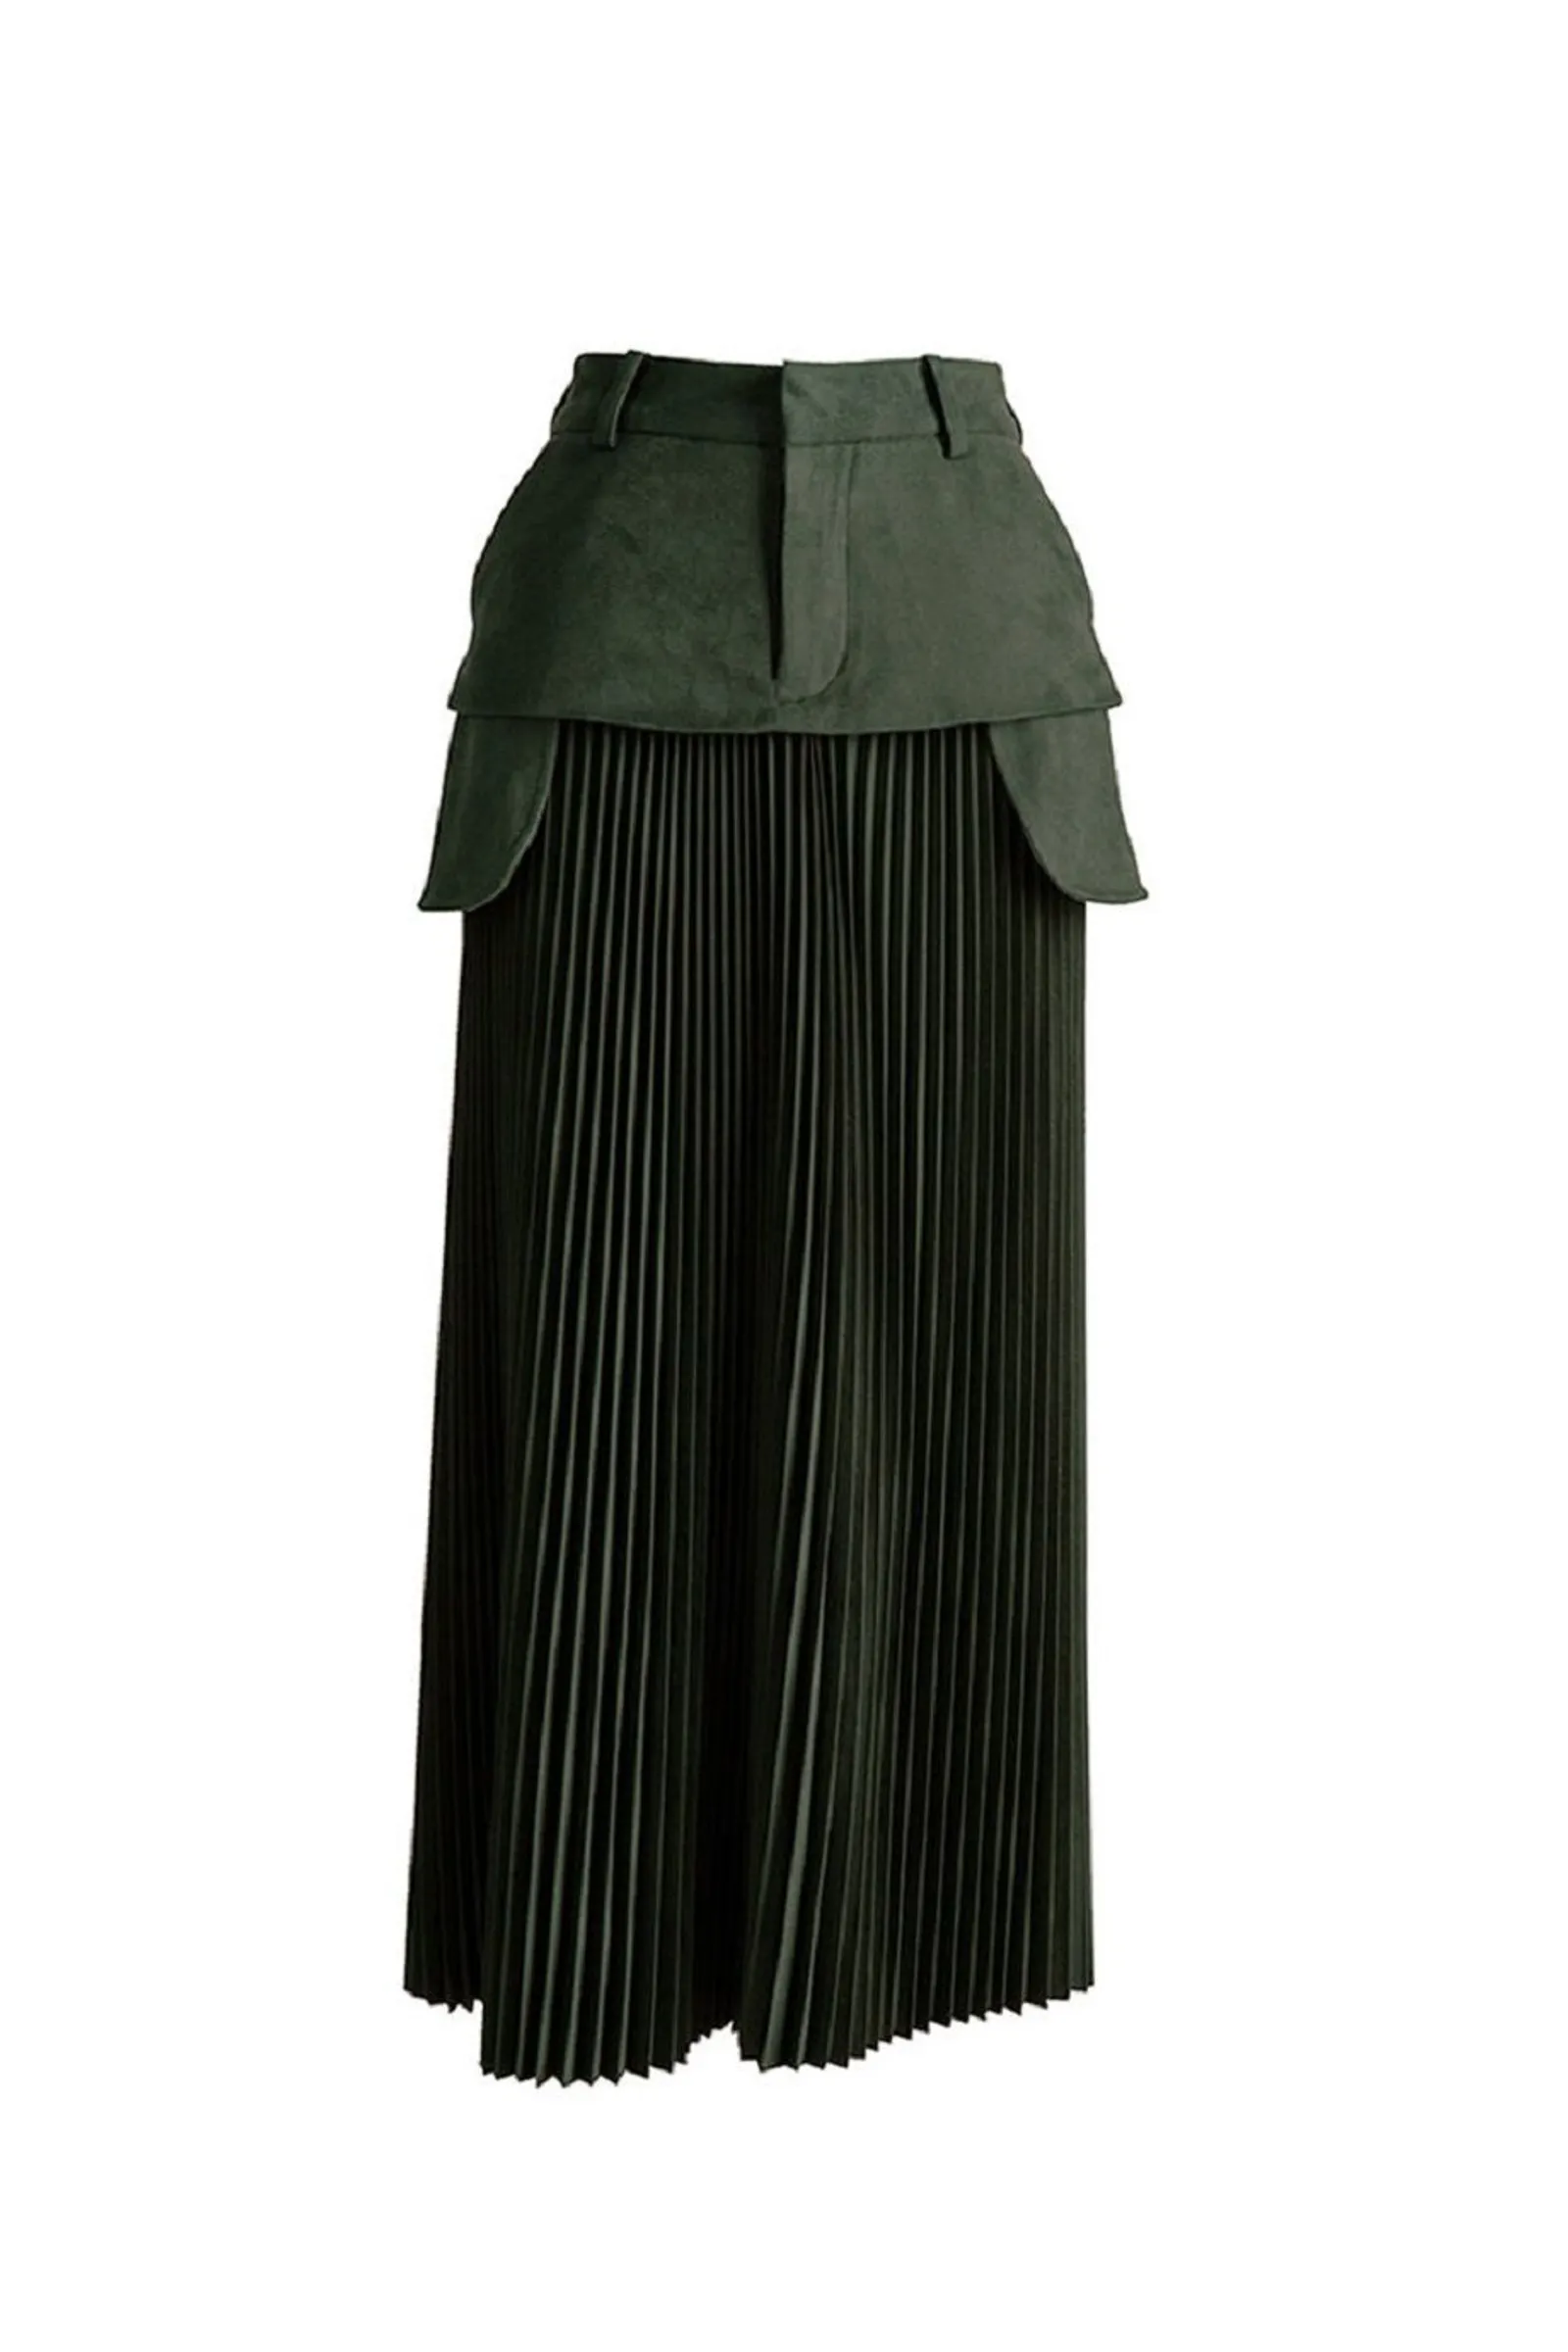 #PopbelaOOTD: Rekomendasi Pleated Skirt Terbaru untuk Gaya yang Chic